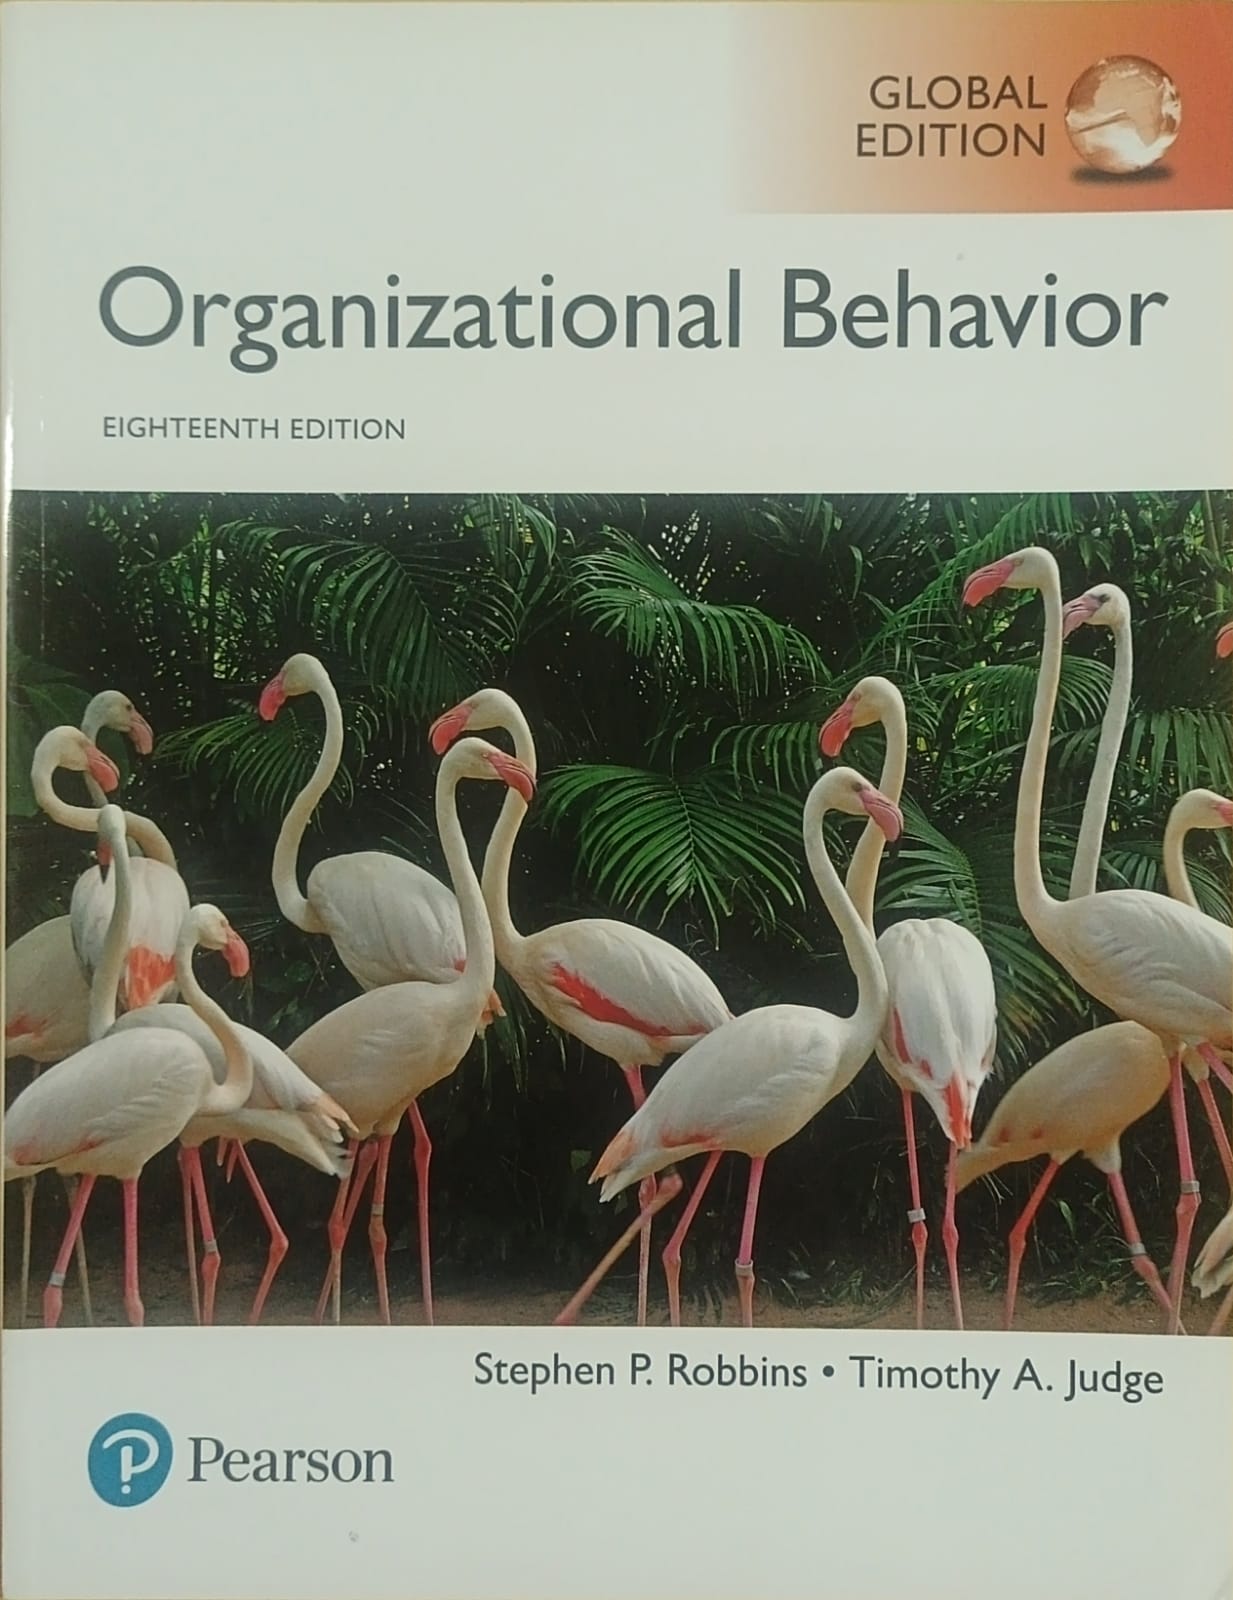 Organizational behavior 18th Global edition